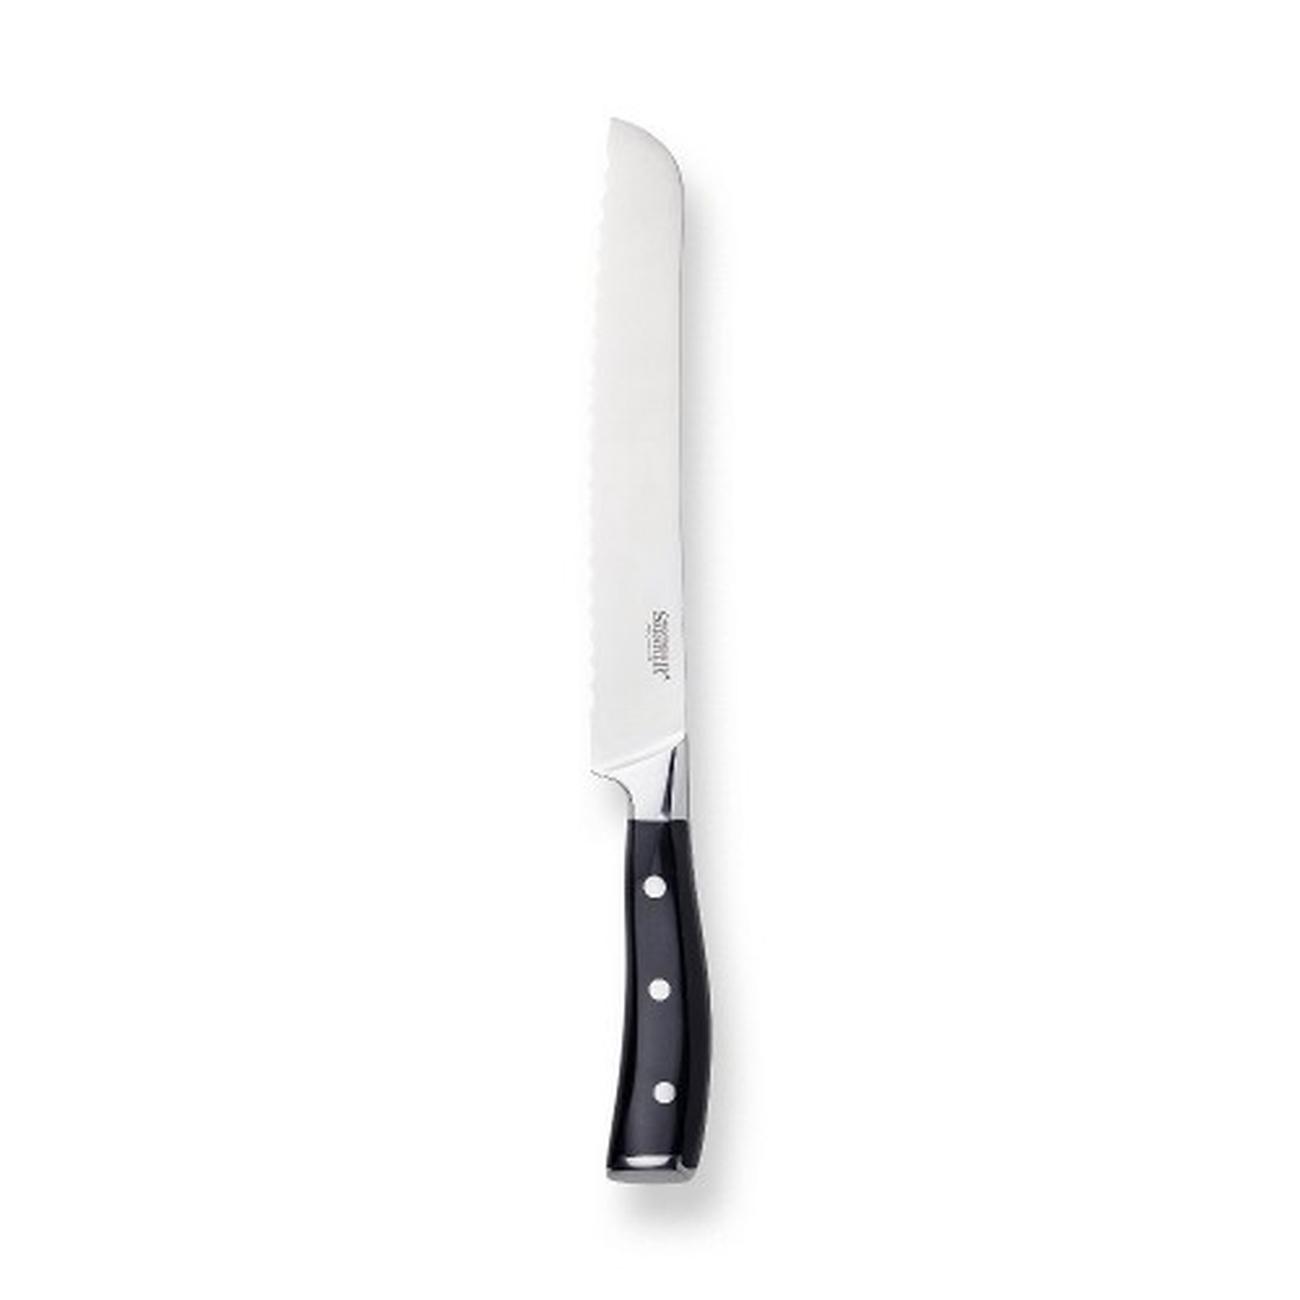 bread-knife-8-inch-sabatier - Sabatier Professional Bread Knife 8 Inch